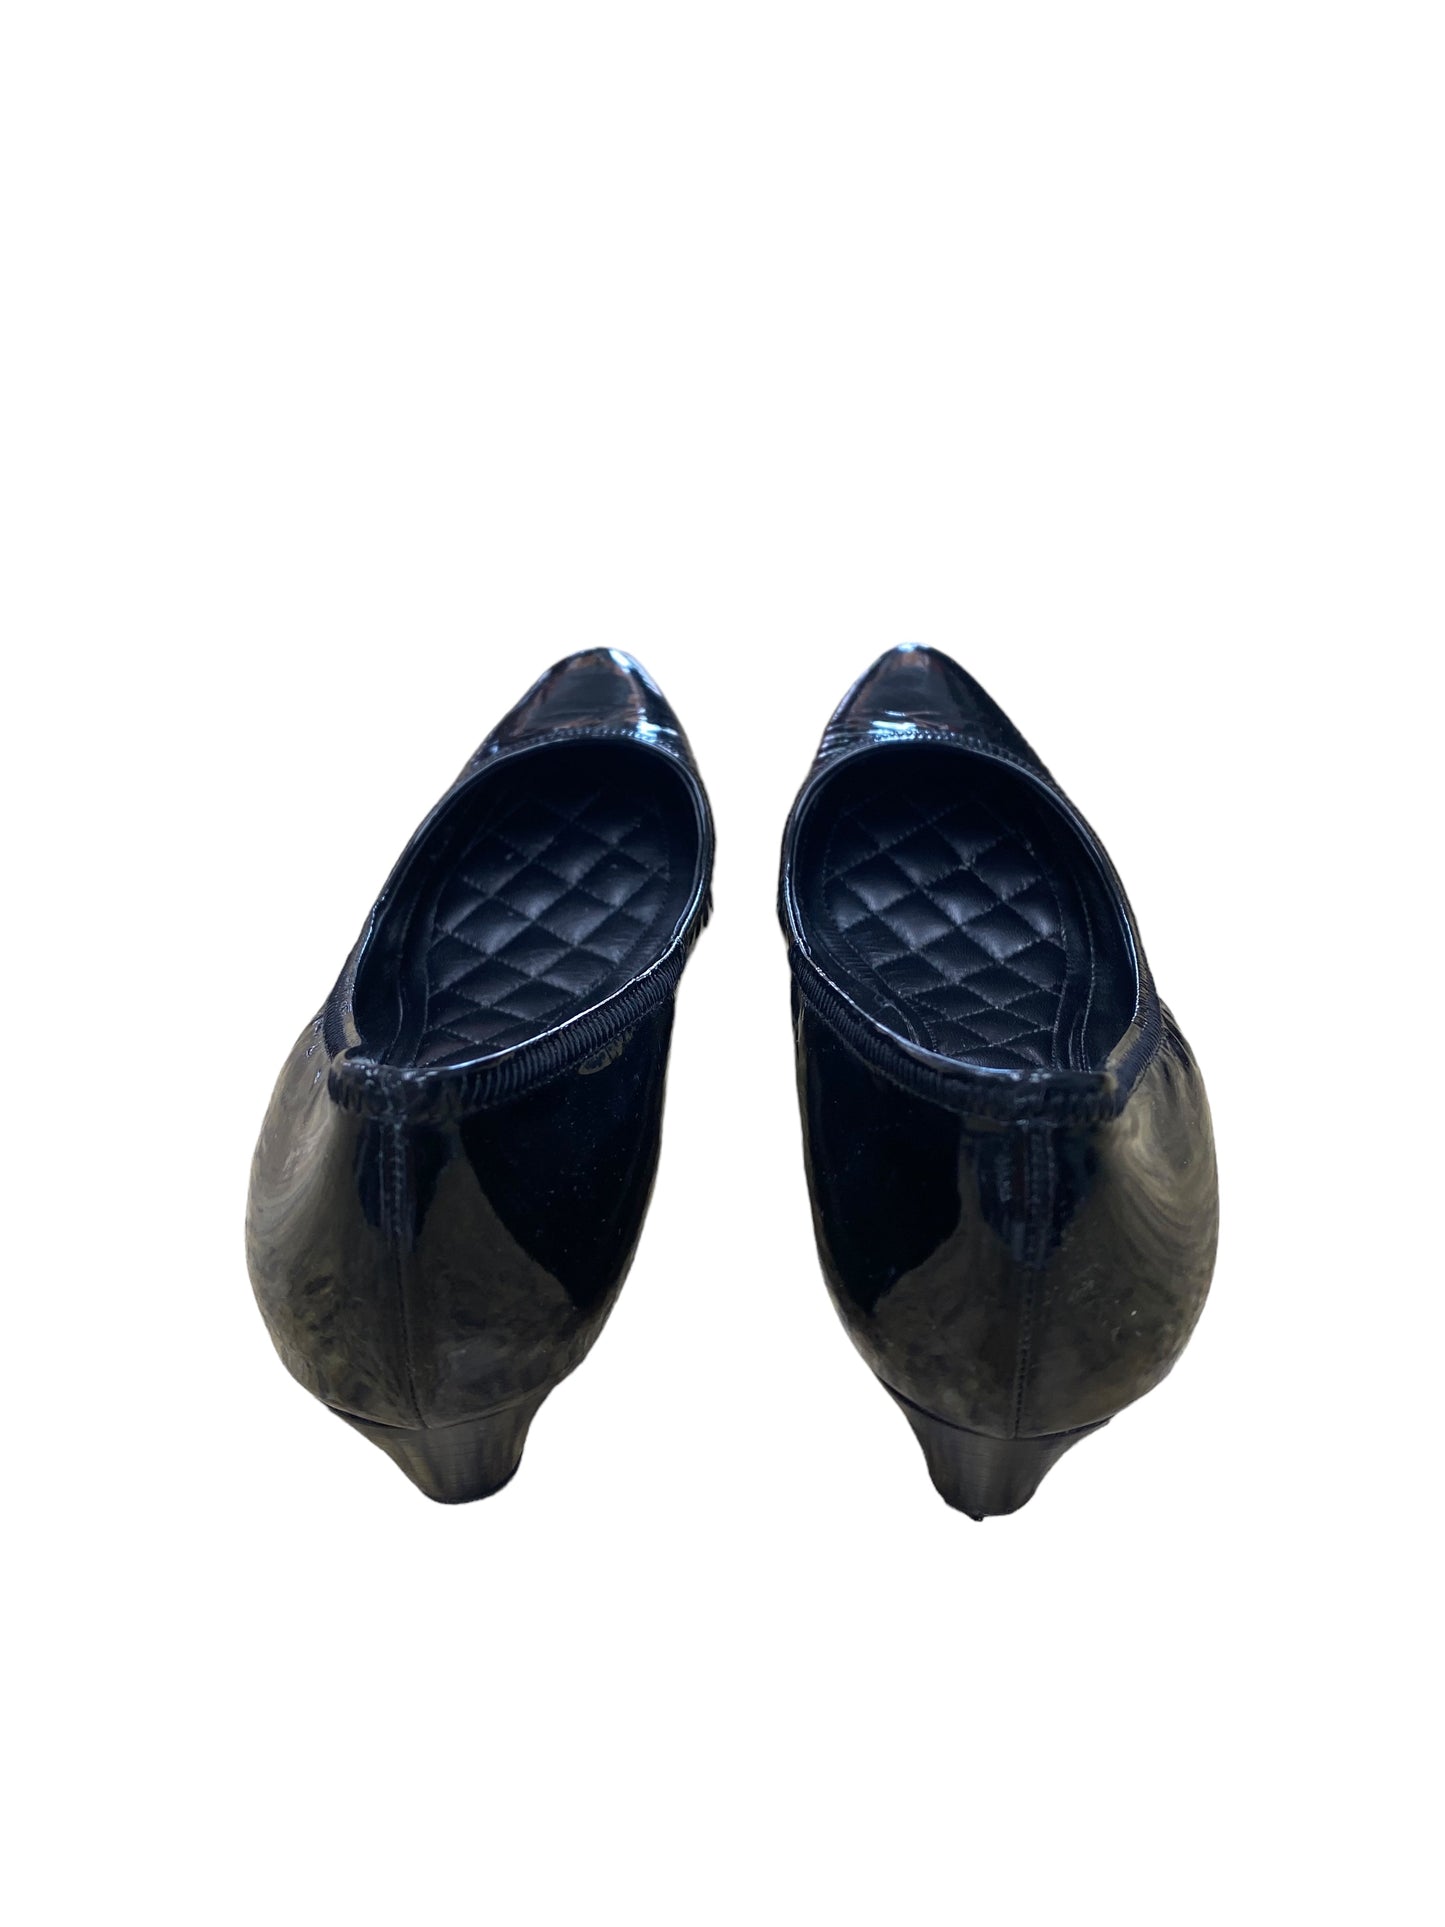 Black Shoes Heels Wedge Cole-haan, Size 7